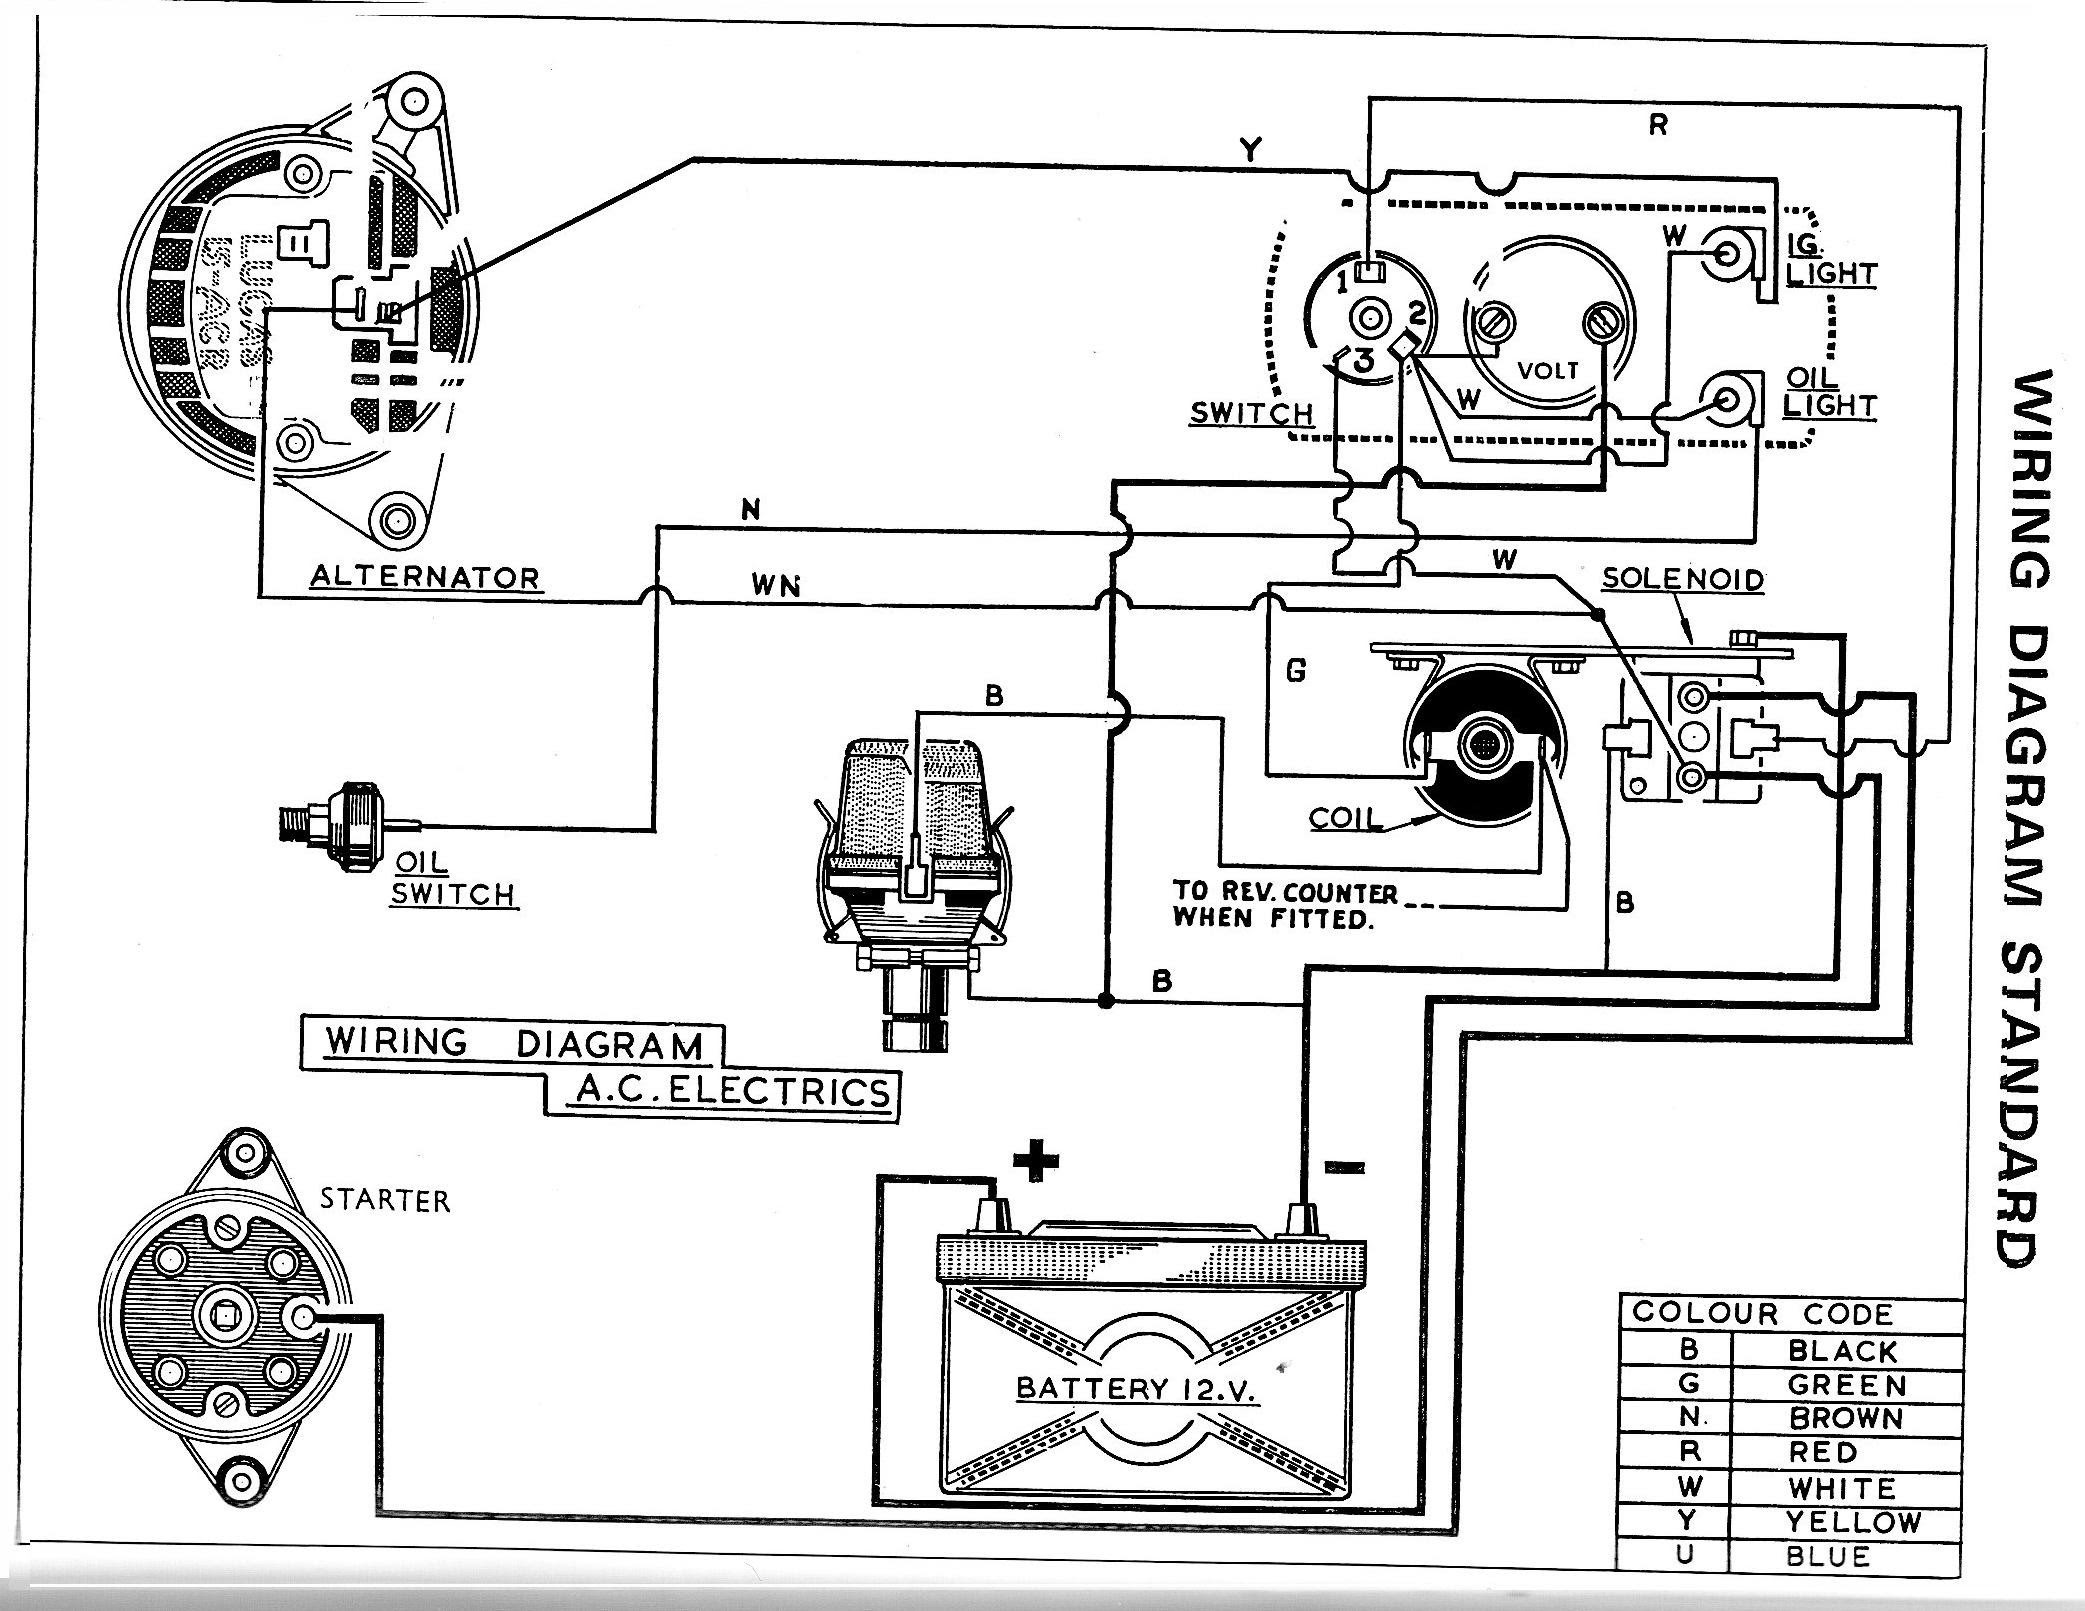 93 Mustang Alternator Wiring Diagram - Wiring Diagram Networks